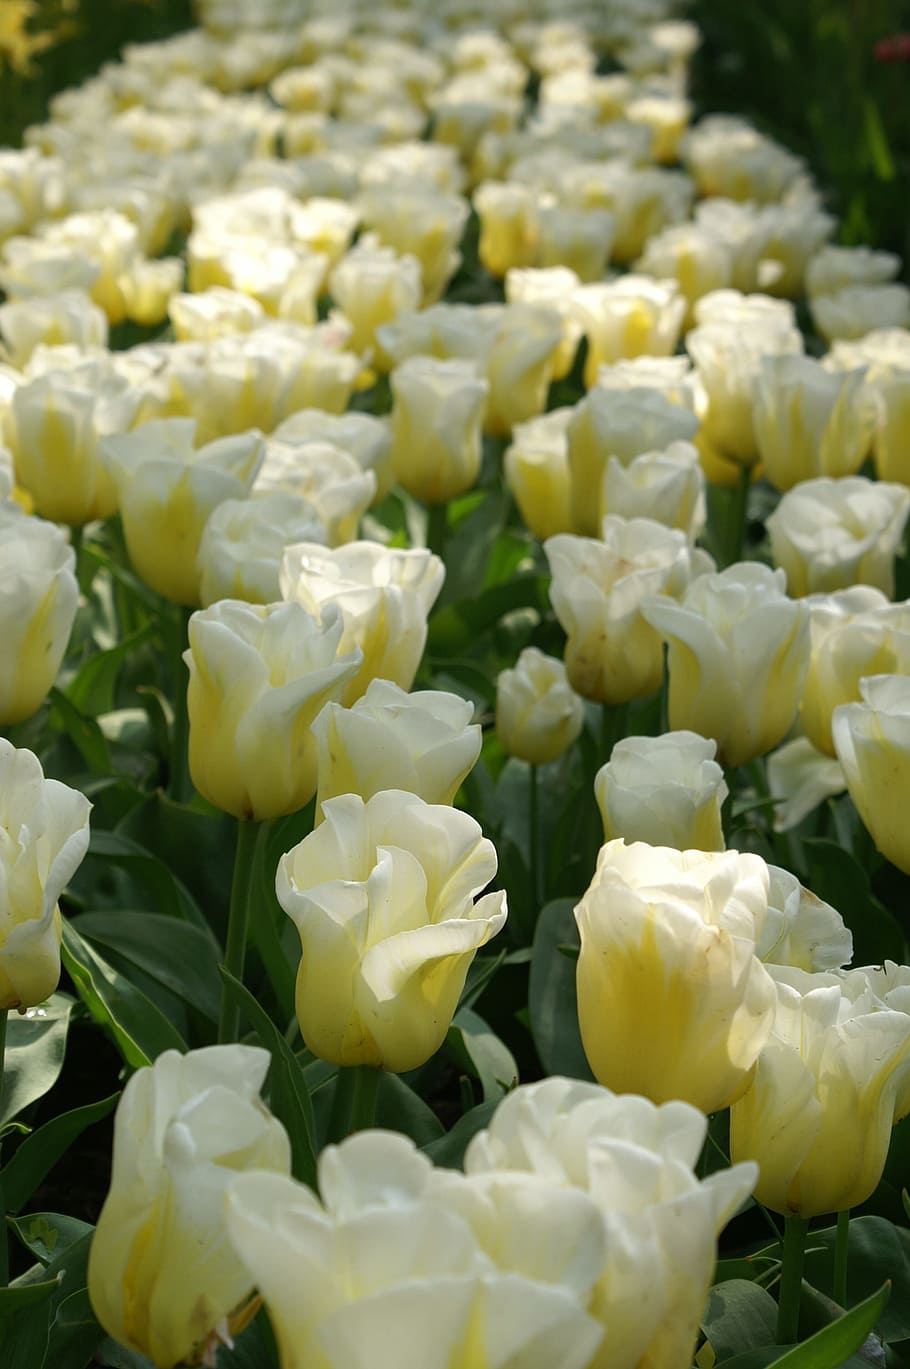 tulips, holland, spring, nature, tulip, tulip fields, keukenhof